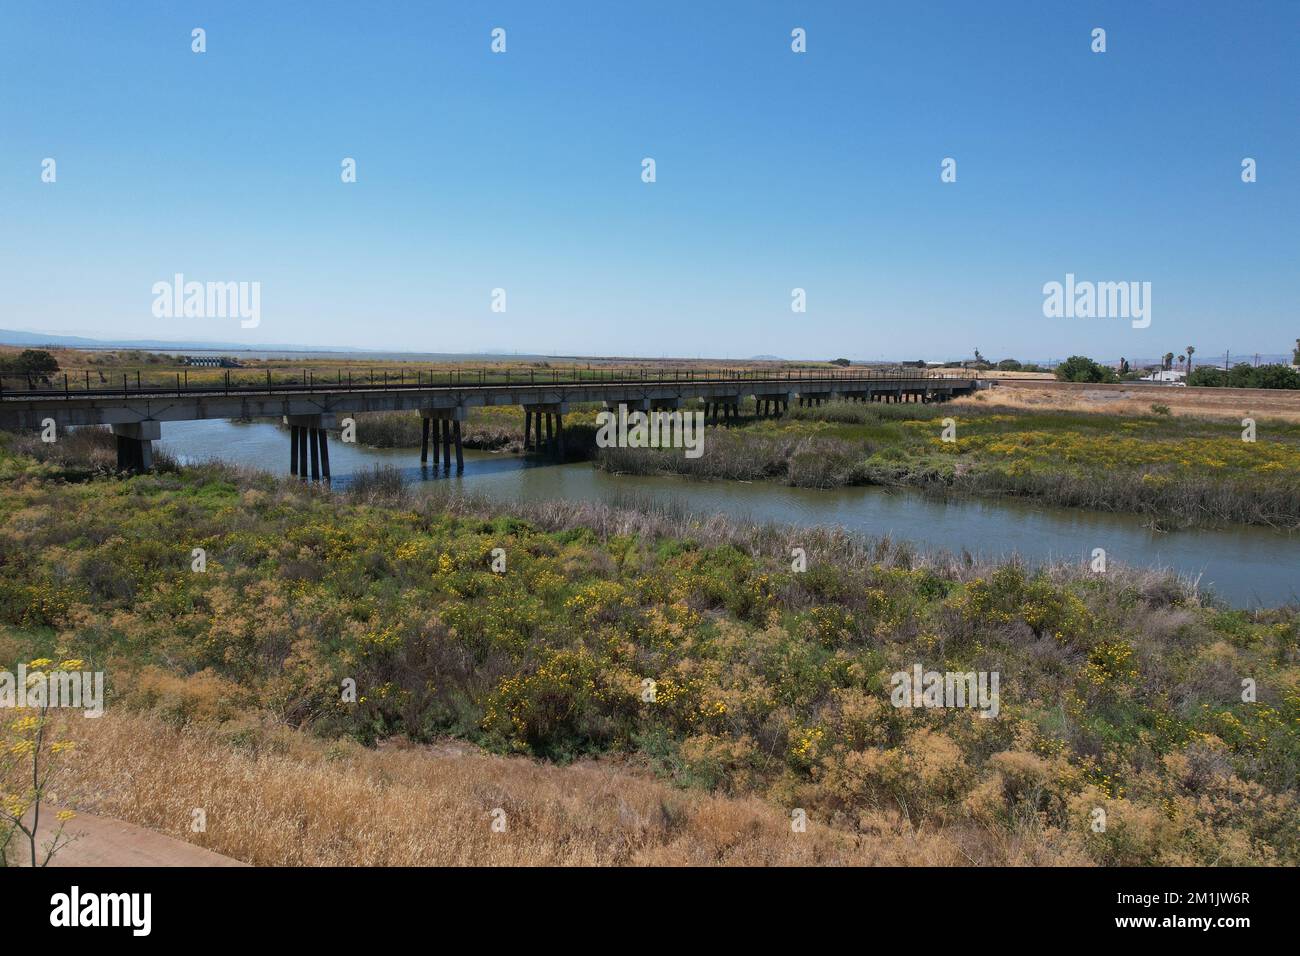 Photos of Marshes and streams in Alviso, California, Stock Photo